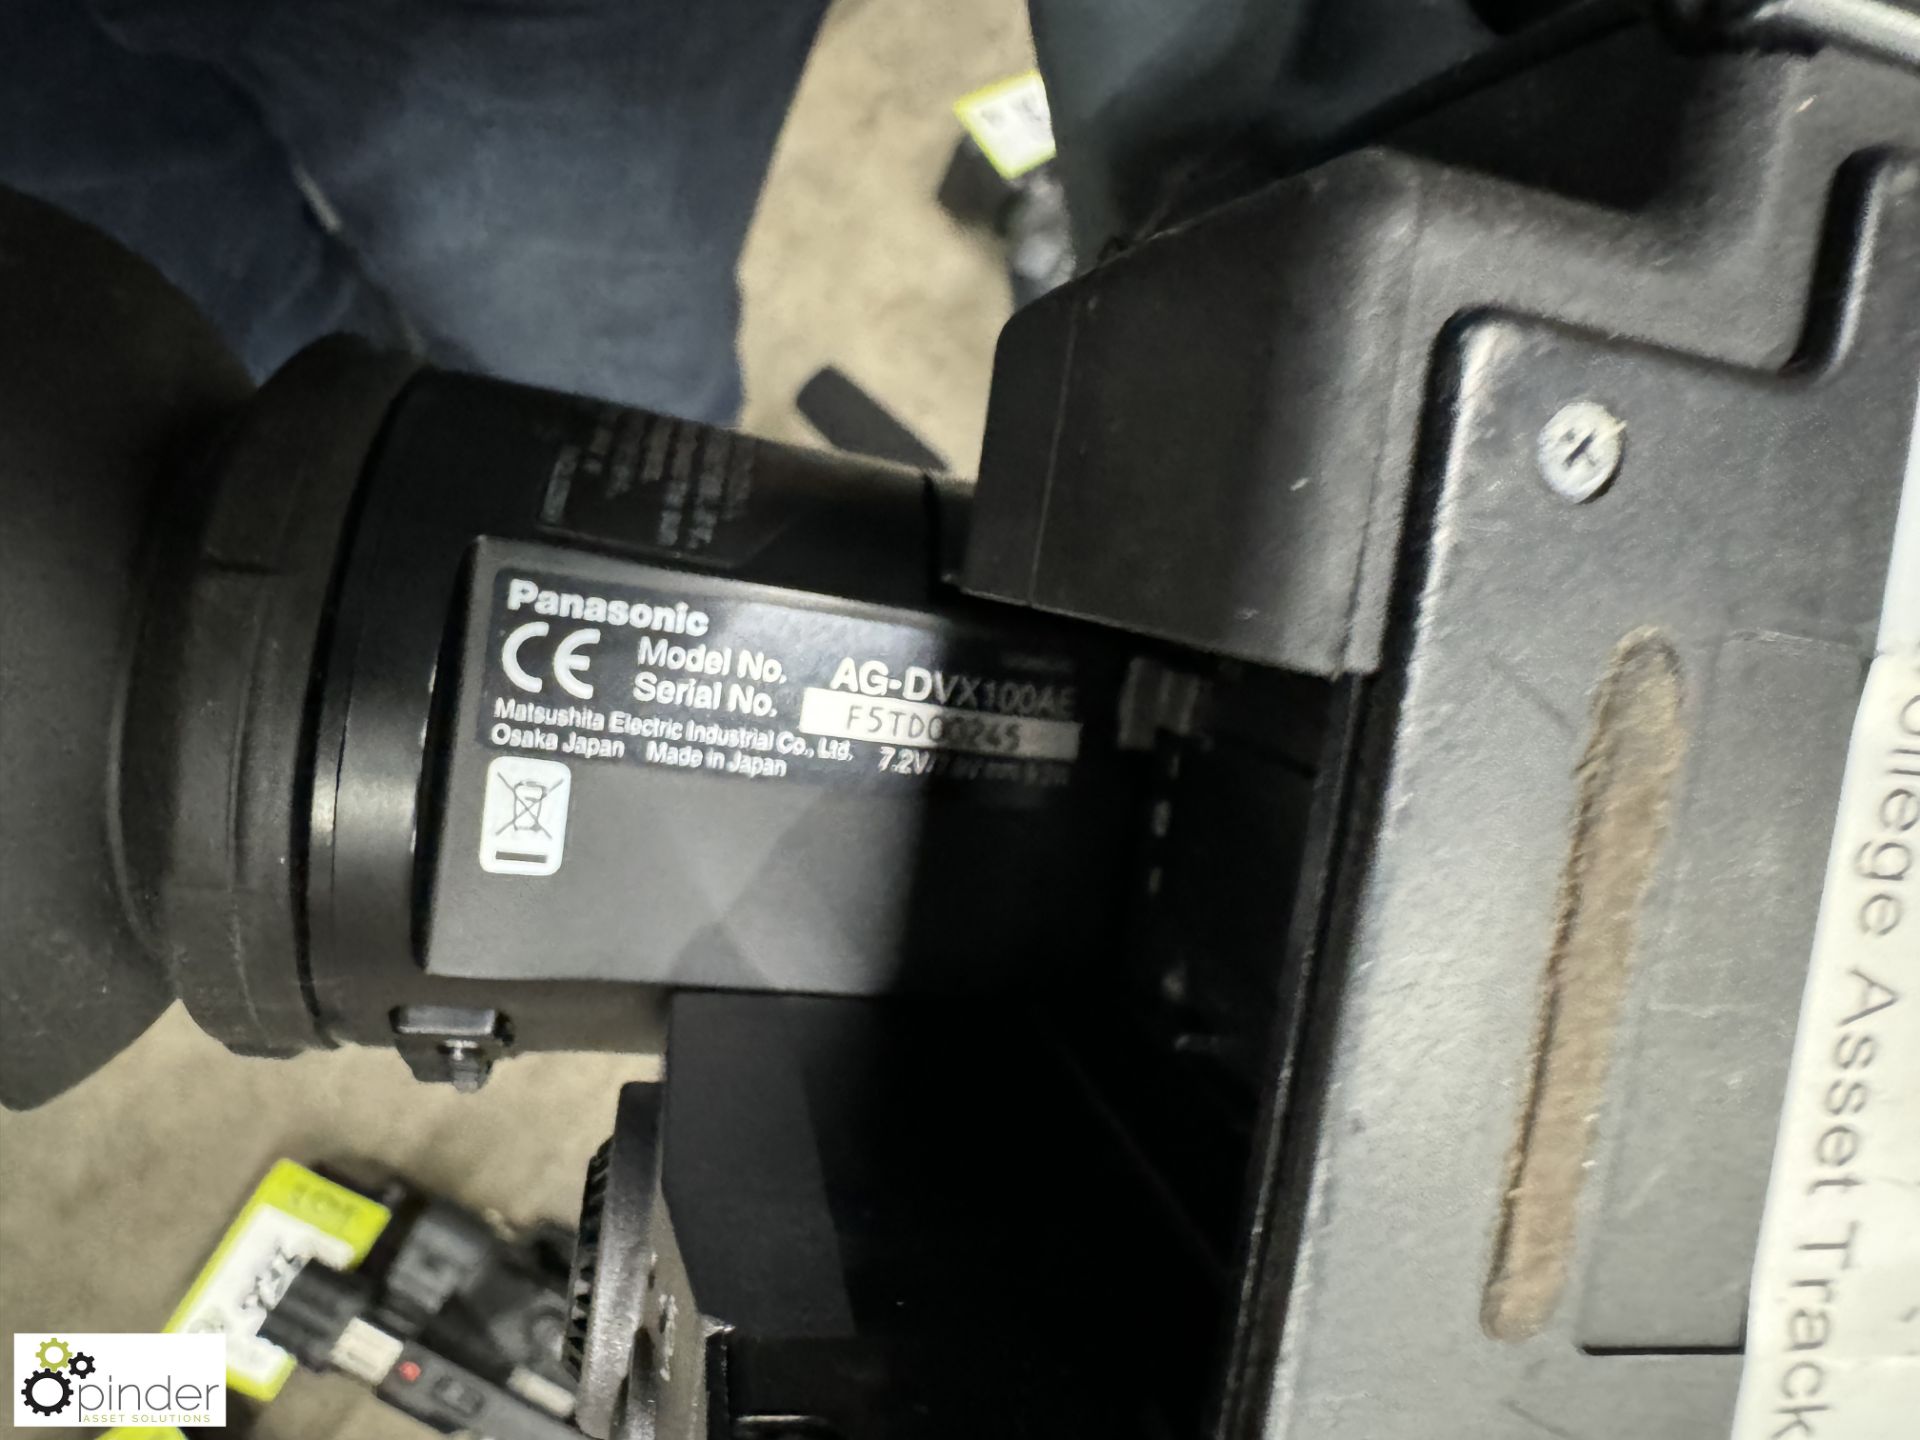 Panasonic AG-DUV100A Camera Recorder, with Leica Dicomar lens - Image 4 of 5